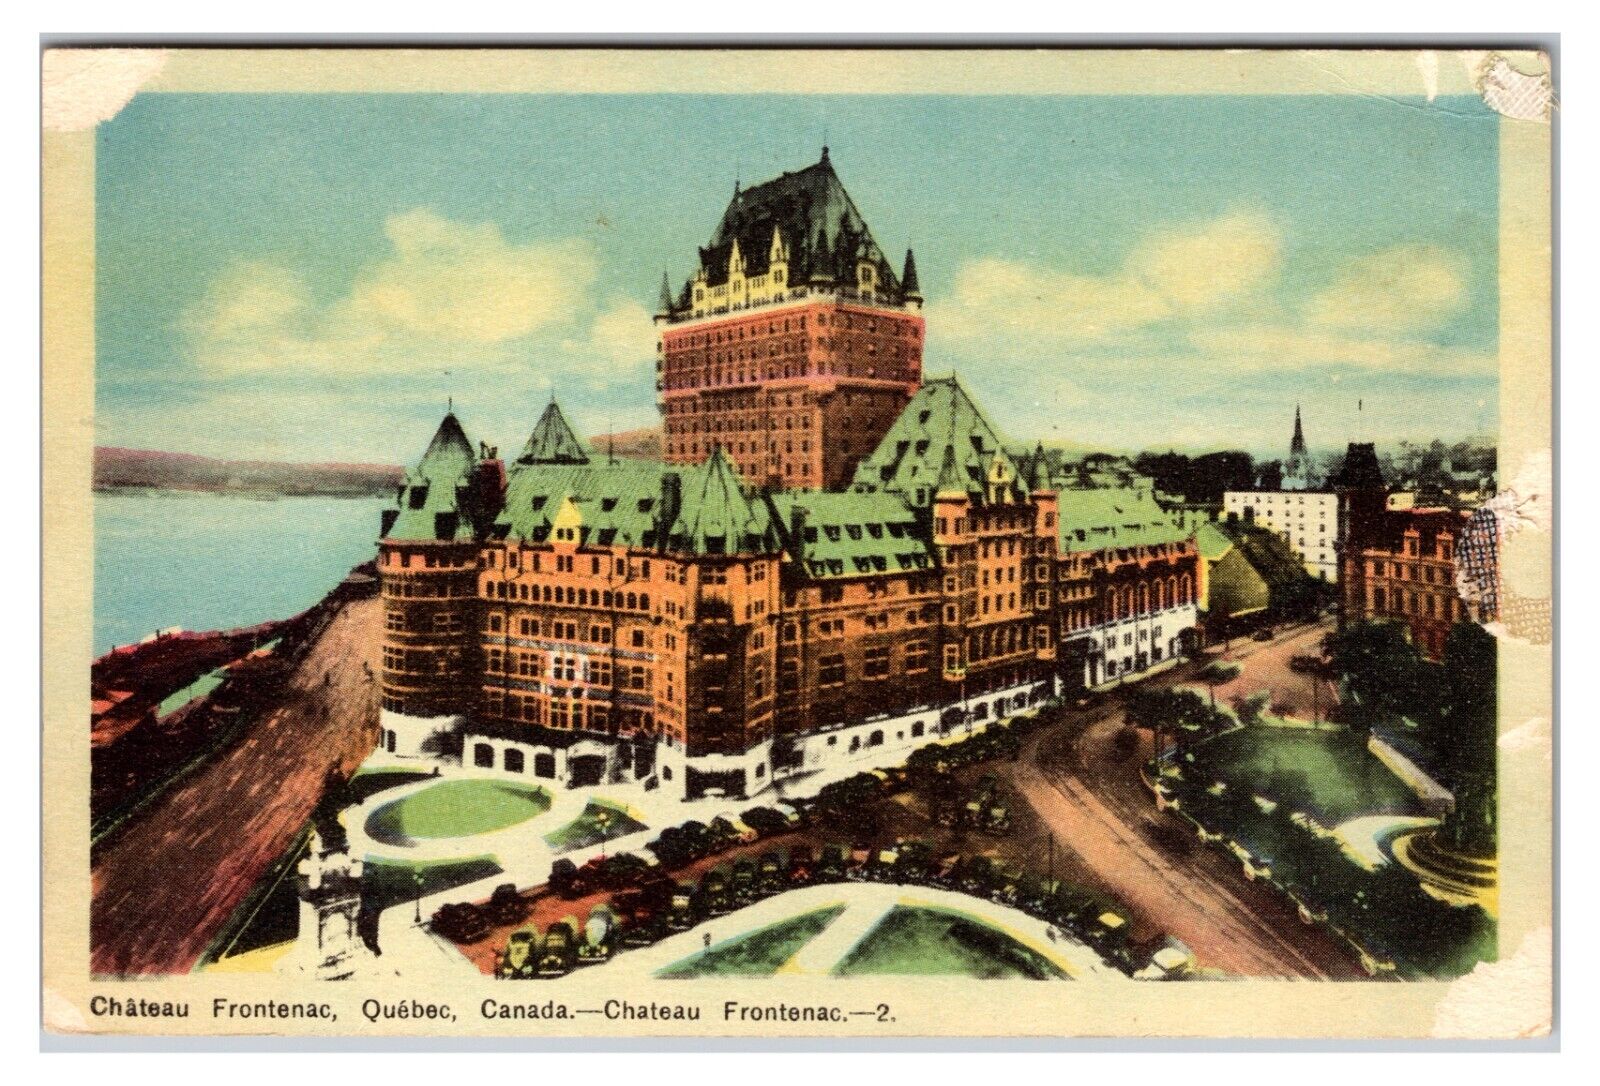 VTG 1930s - Chateau Frontenac - Frontenac, Quebec - Canada Postcard (UnPosted)